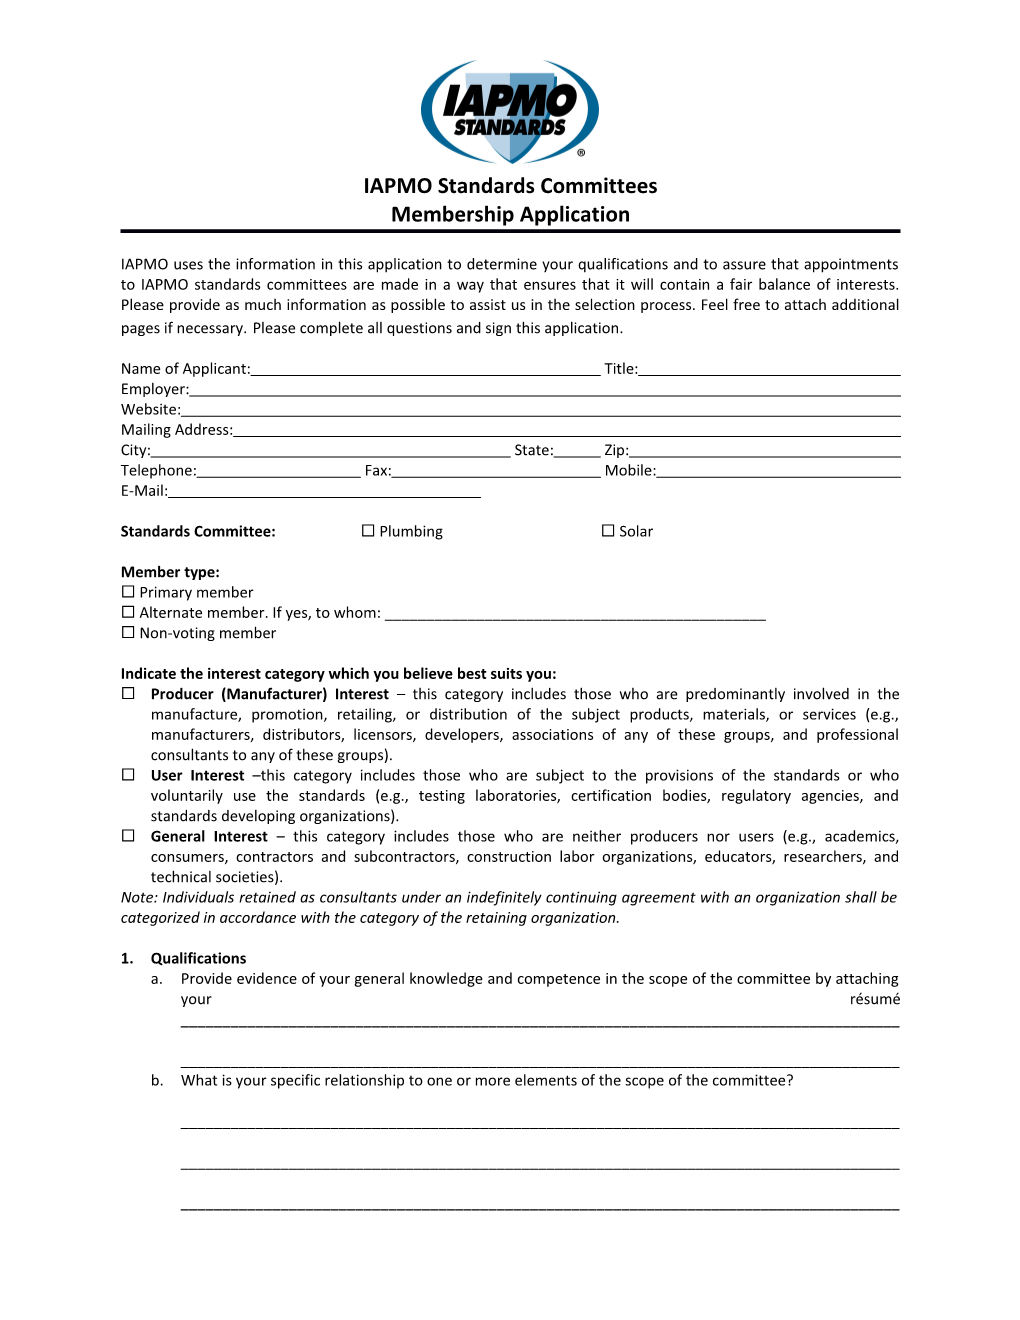 IAPMO Technical Committee Membership Application